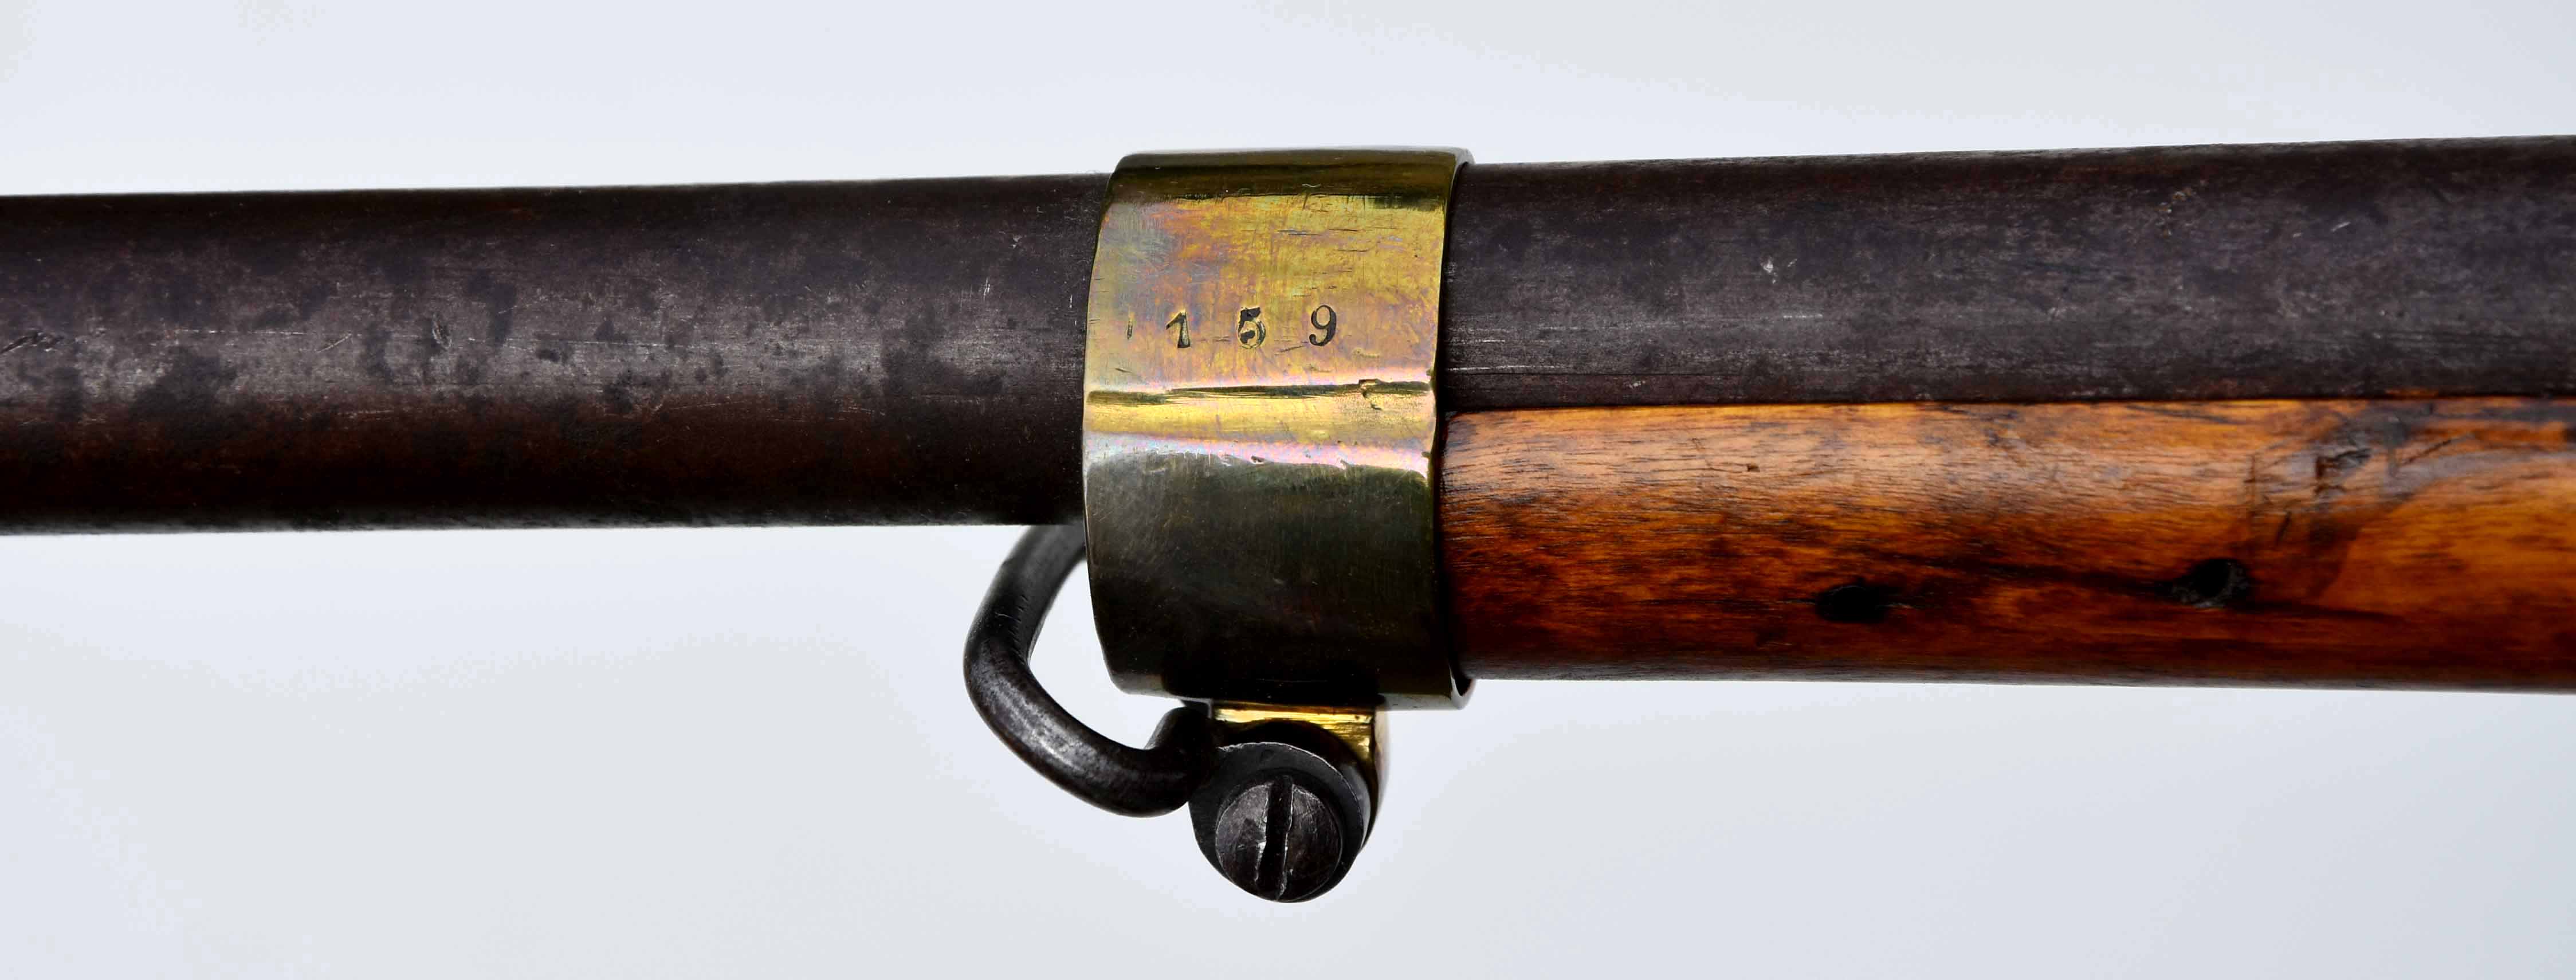 ./guns/rifle/bilder/Rifle-Kongsberg-Kammerlader-M1842-55-59-159-12.jpg